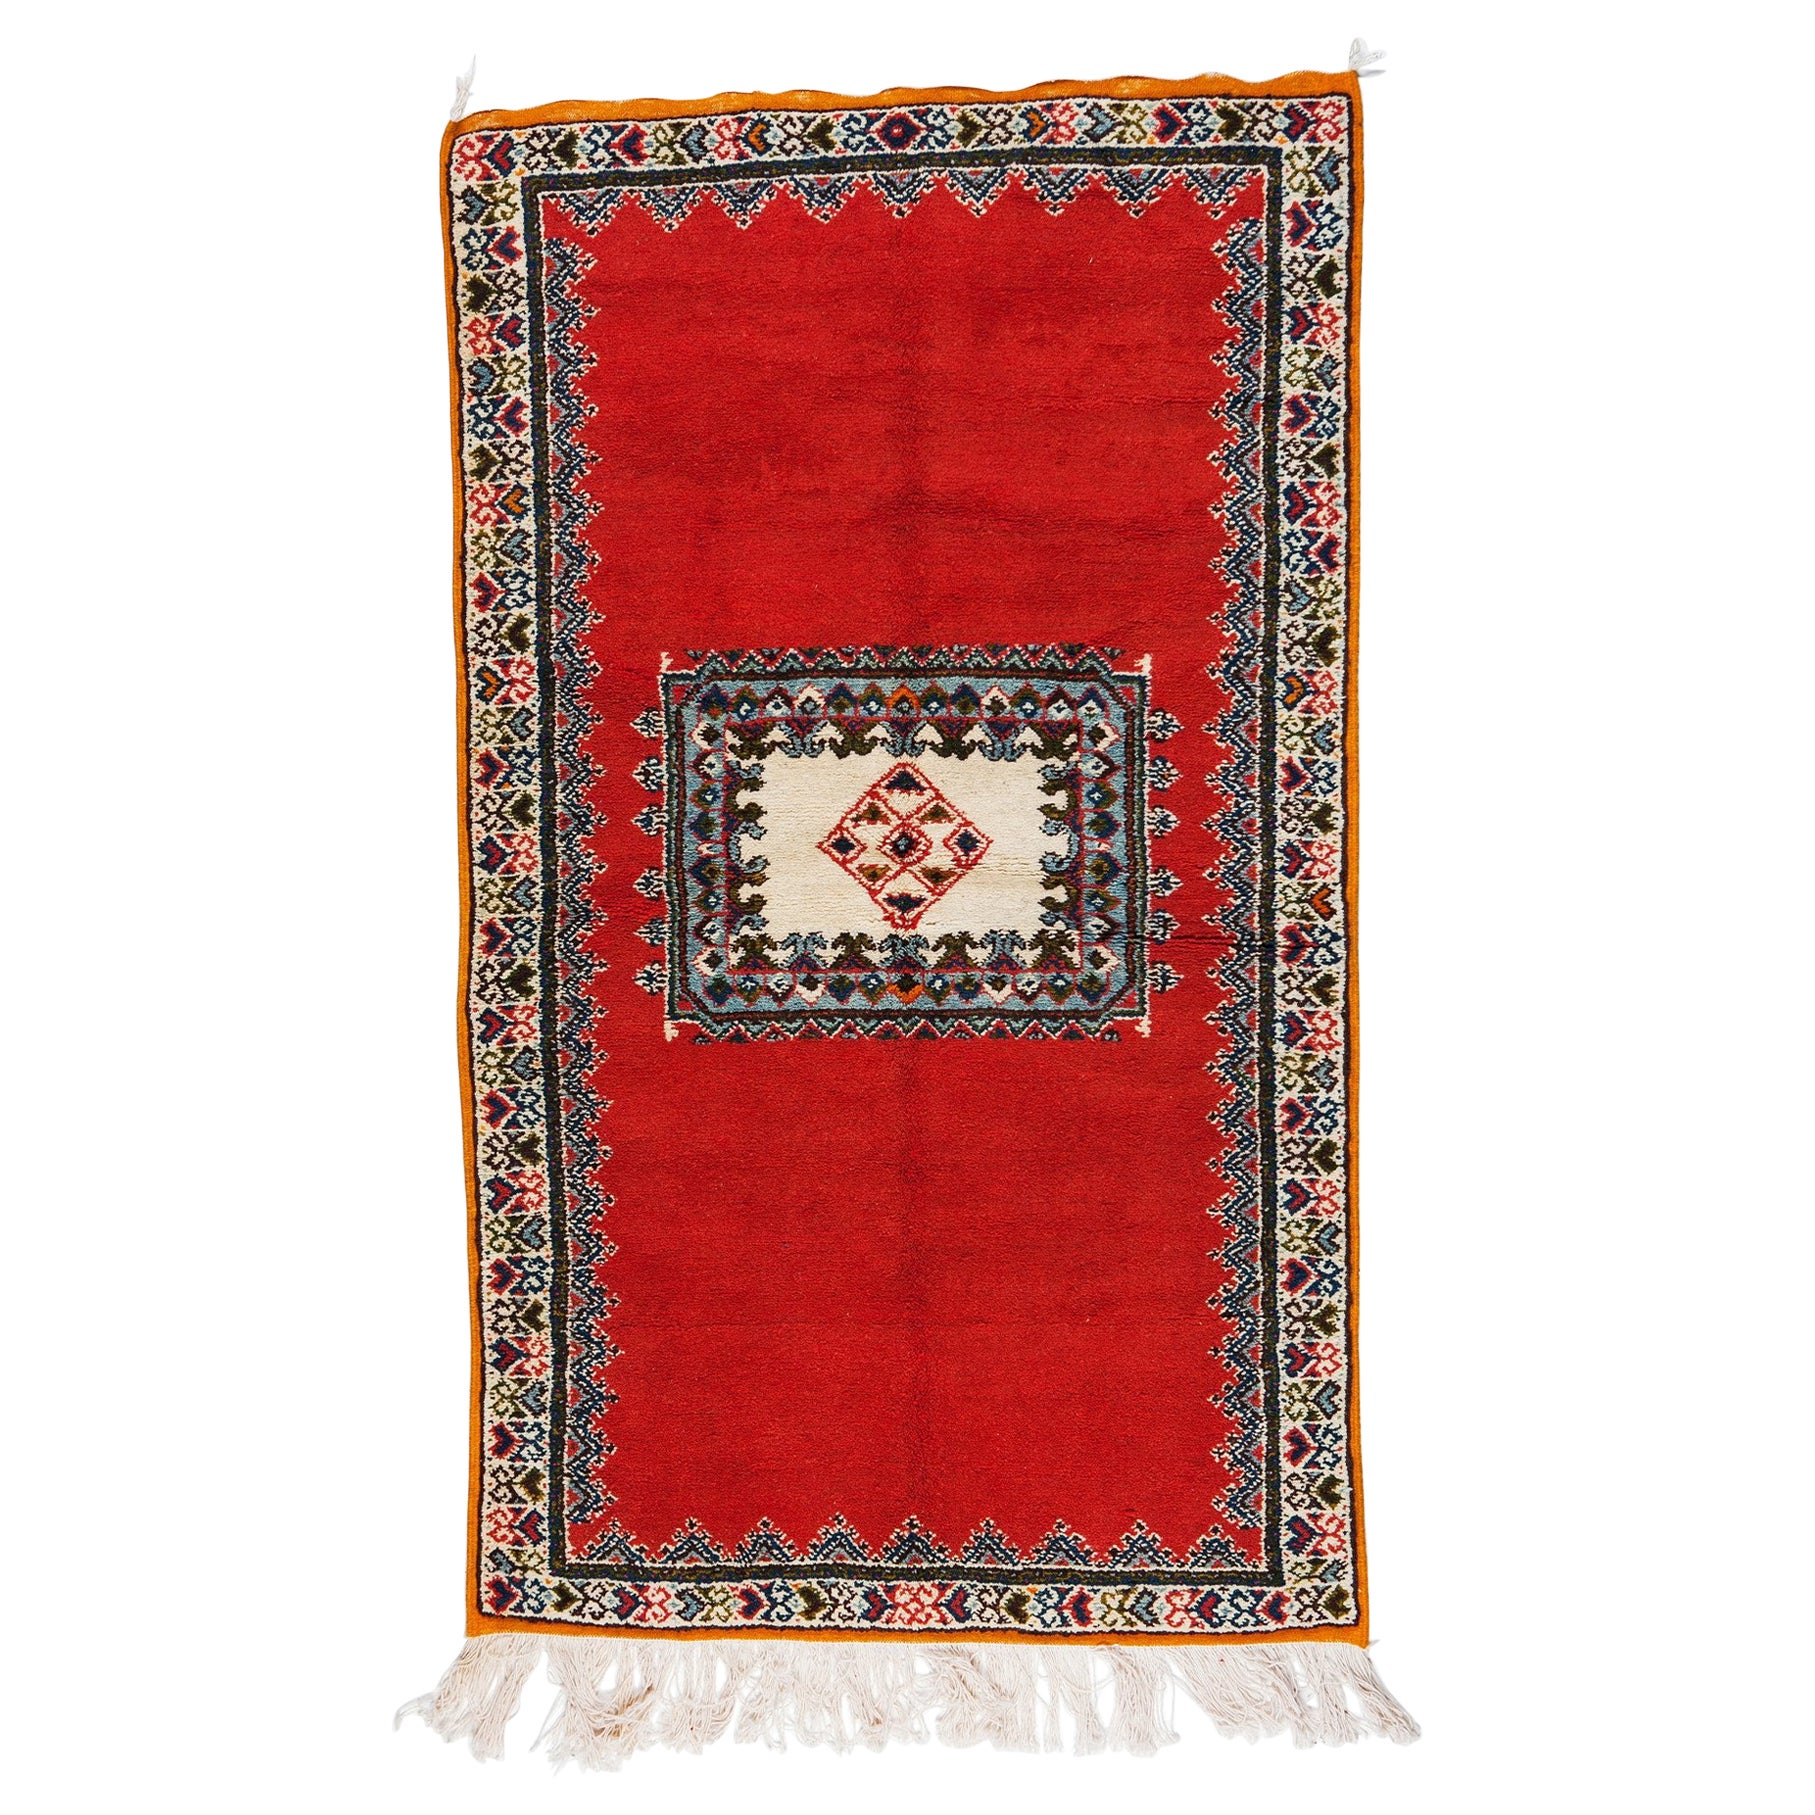 Vintage Tribal Moroccan Red Handwoven Rectangular Wool Rug, Carpet